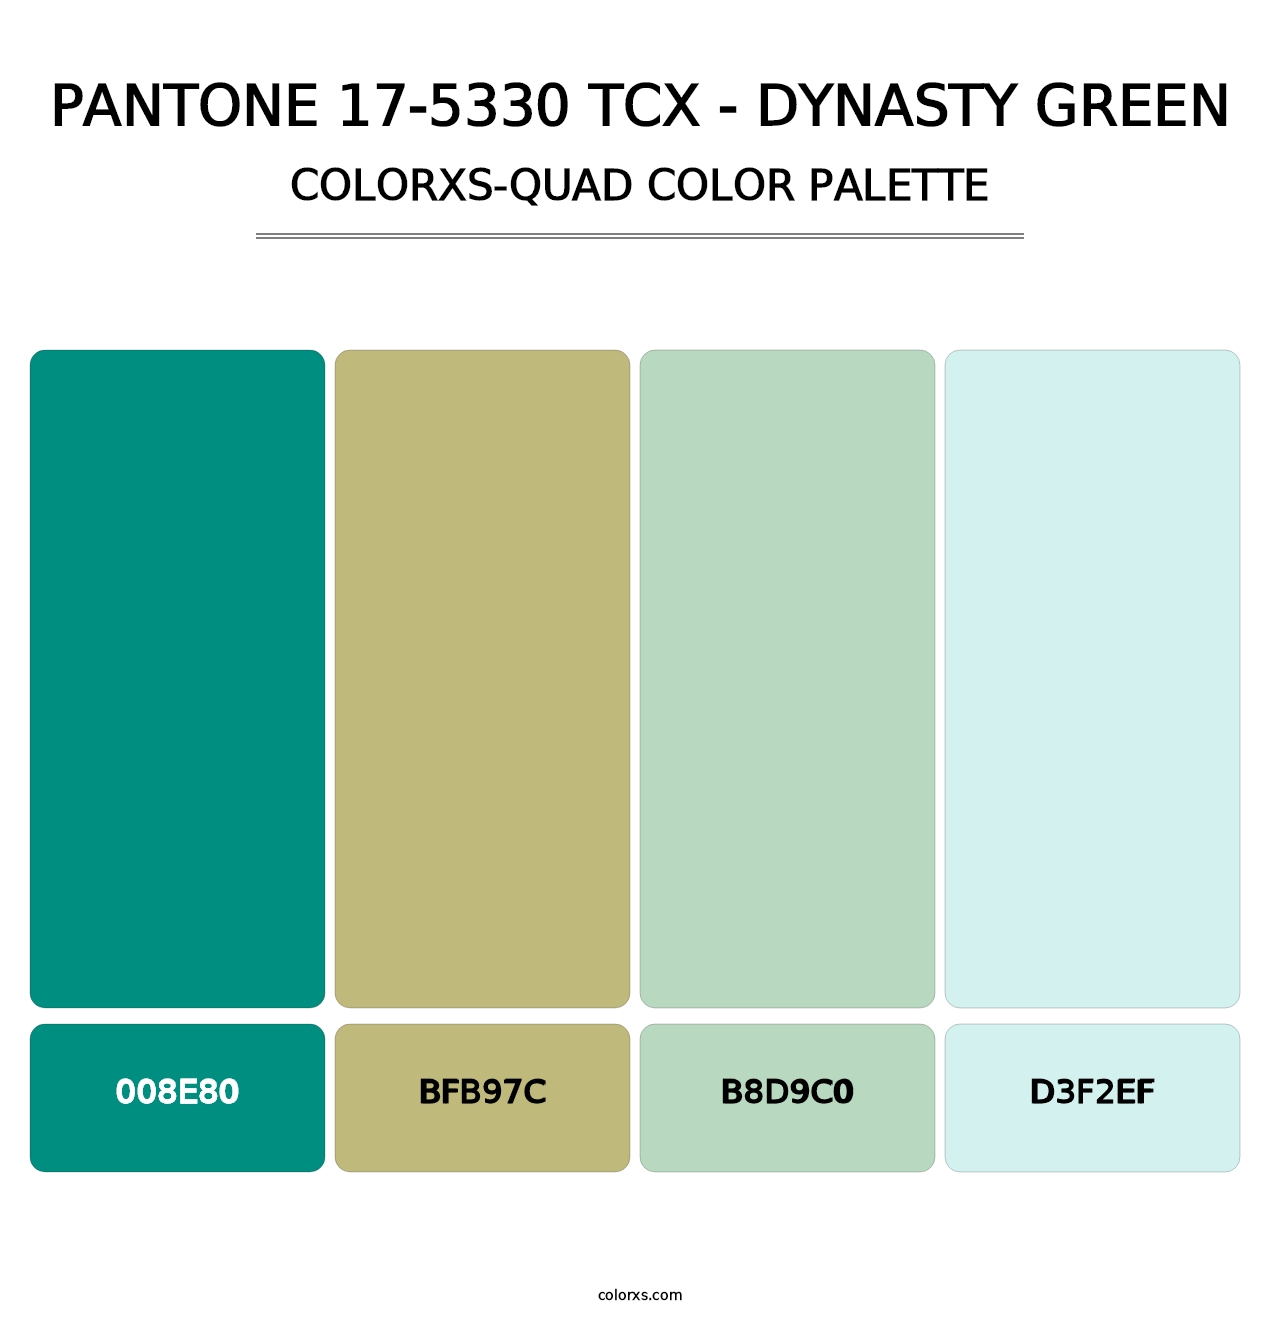 PANTONE 17-5330 TCX - Dynasty Green - Colorxs Quad Palette